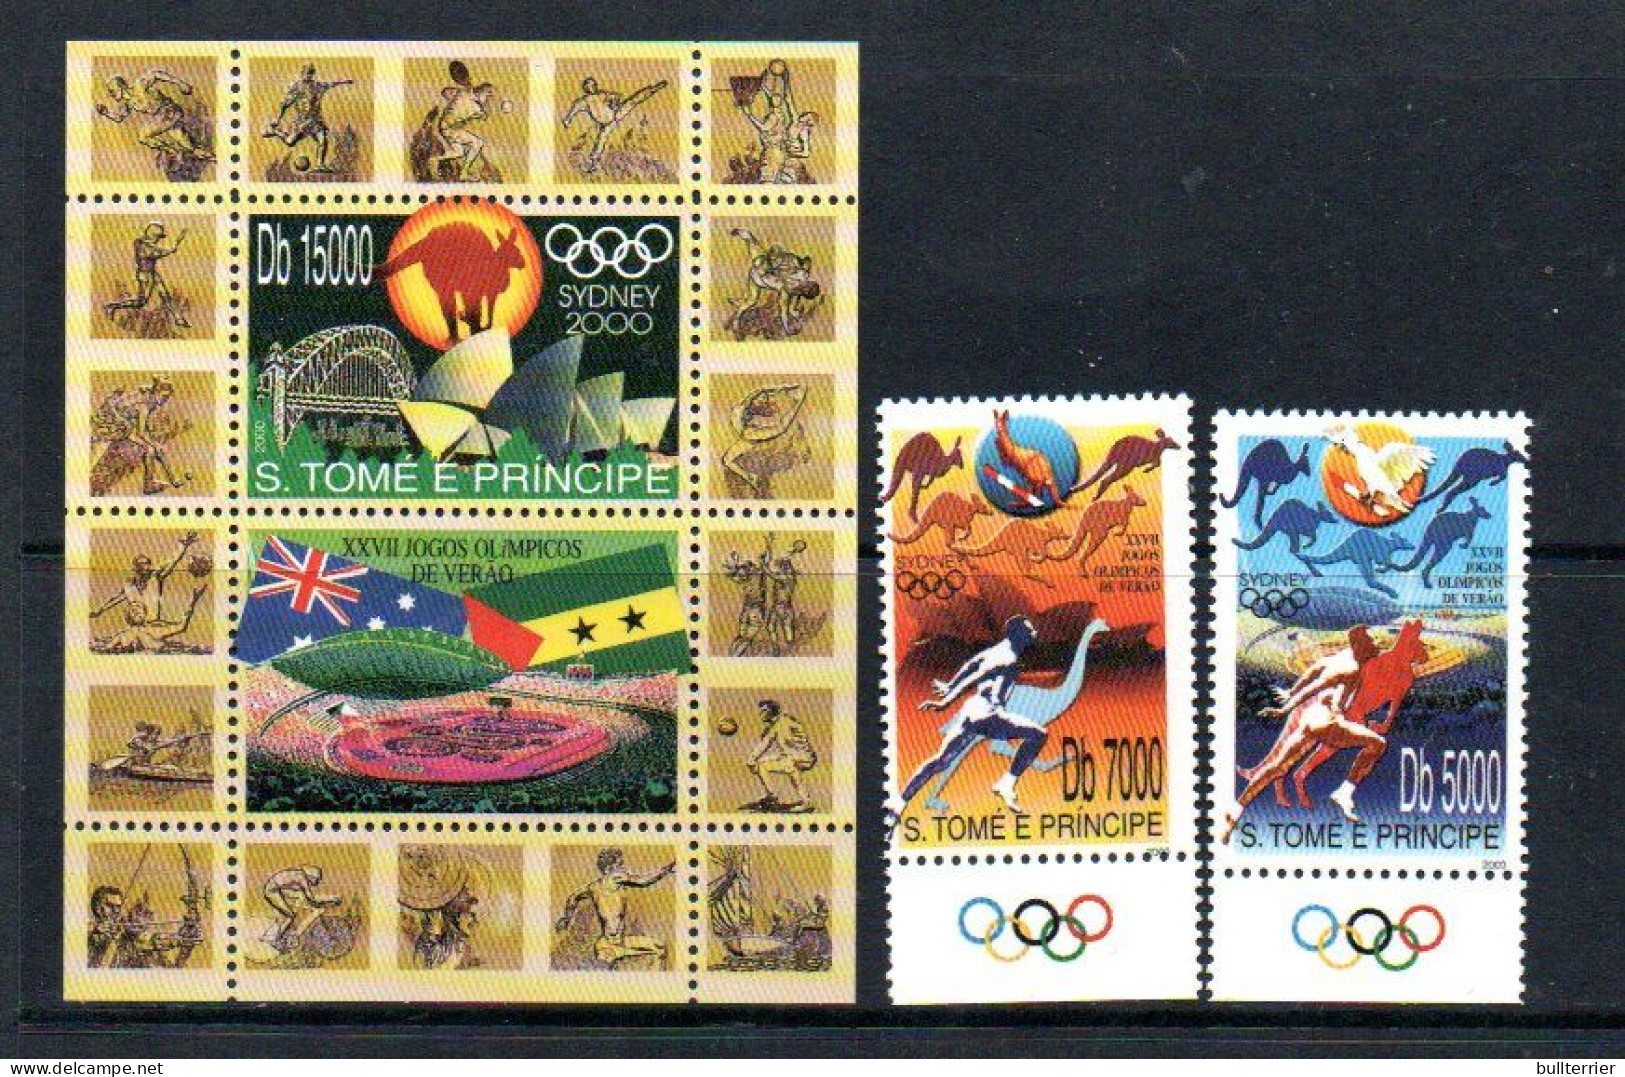 OLYMPICS -  ST HOMAS PRINCE -  2000-Sydney Olympics Set Of 2 + S/sheet  Mint Never Hinged - Ete 2000: Sydney